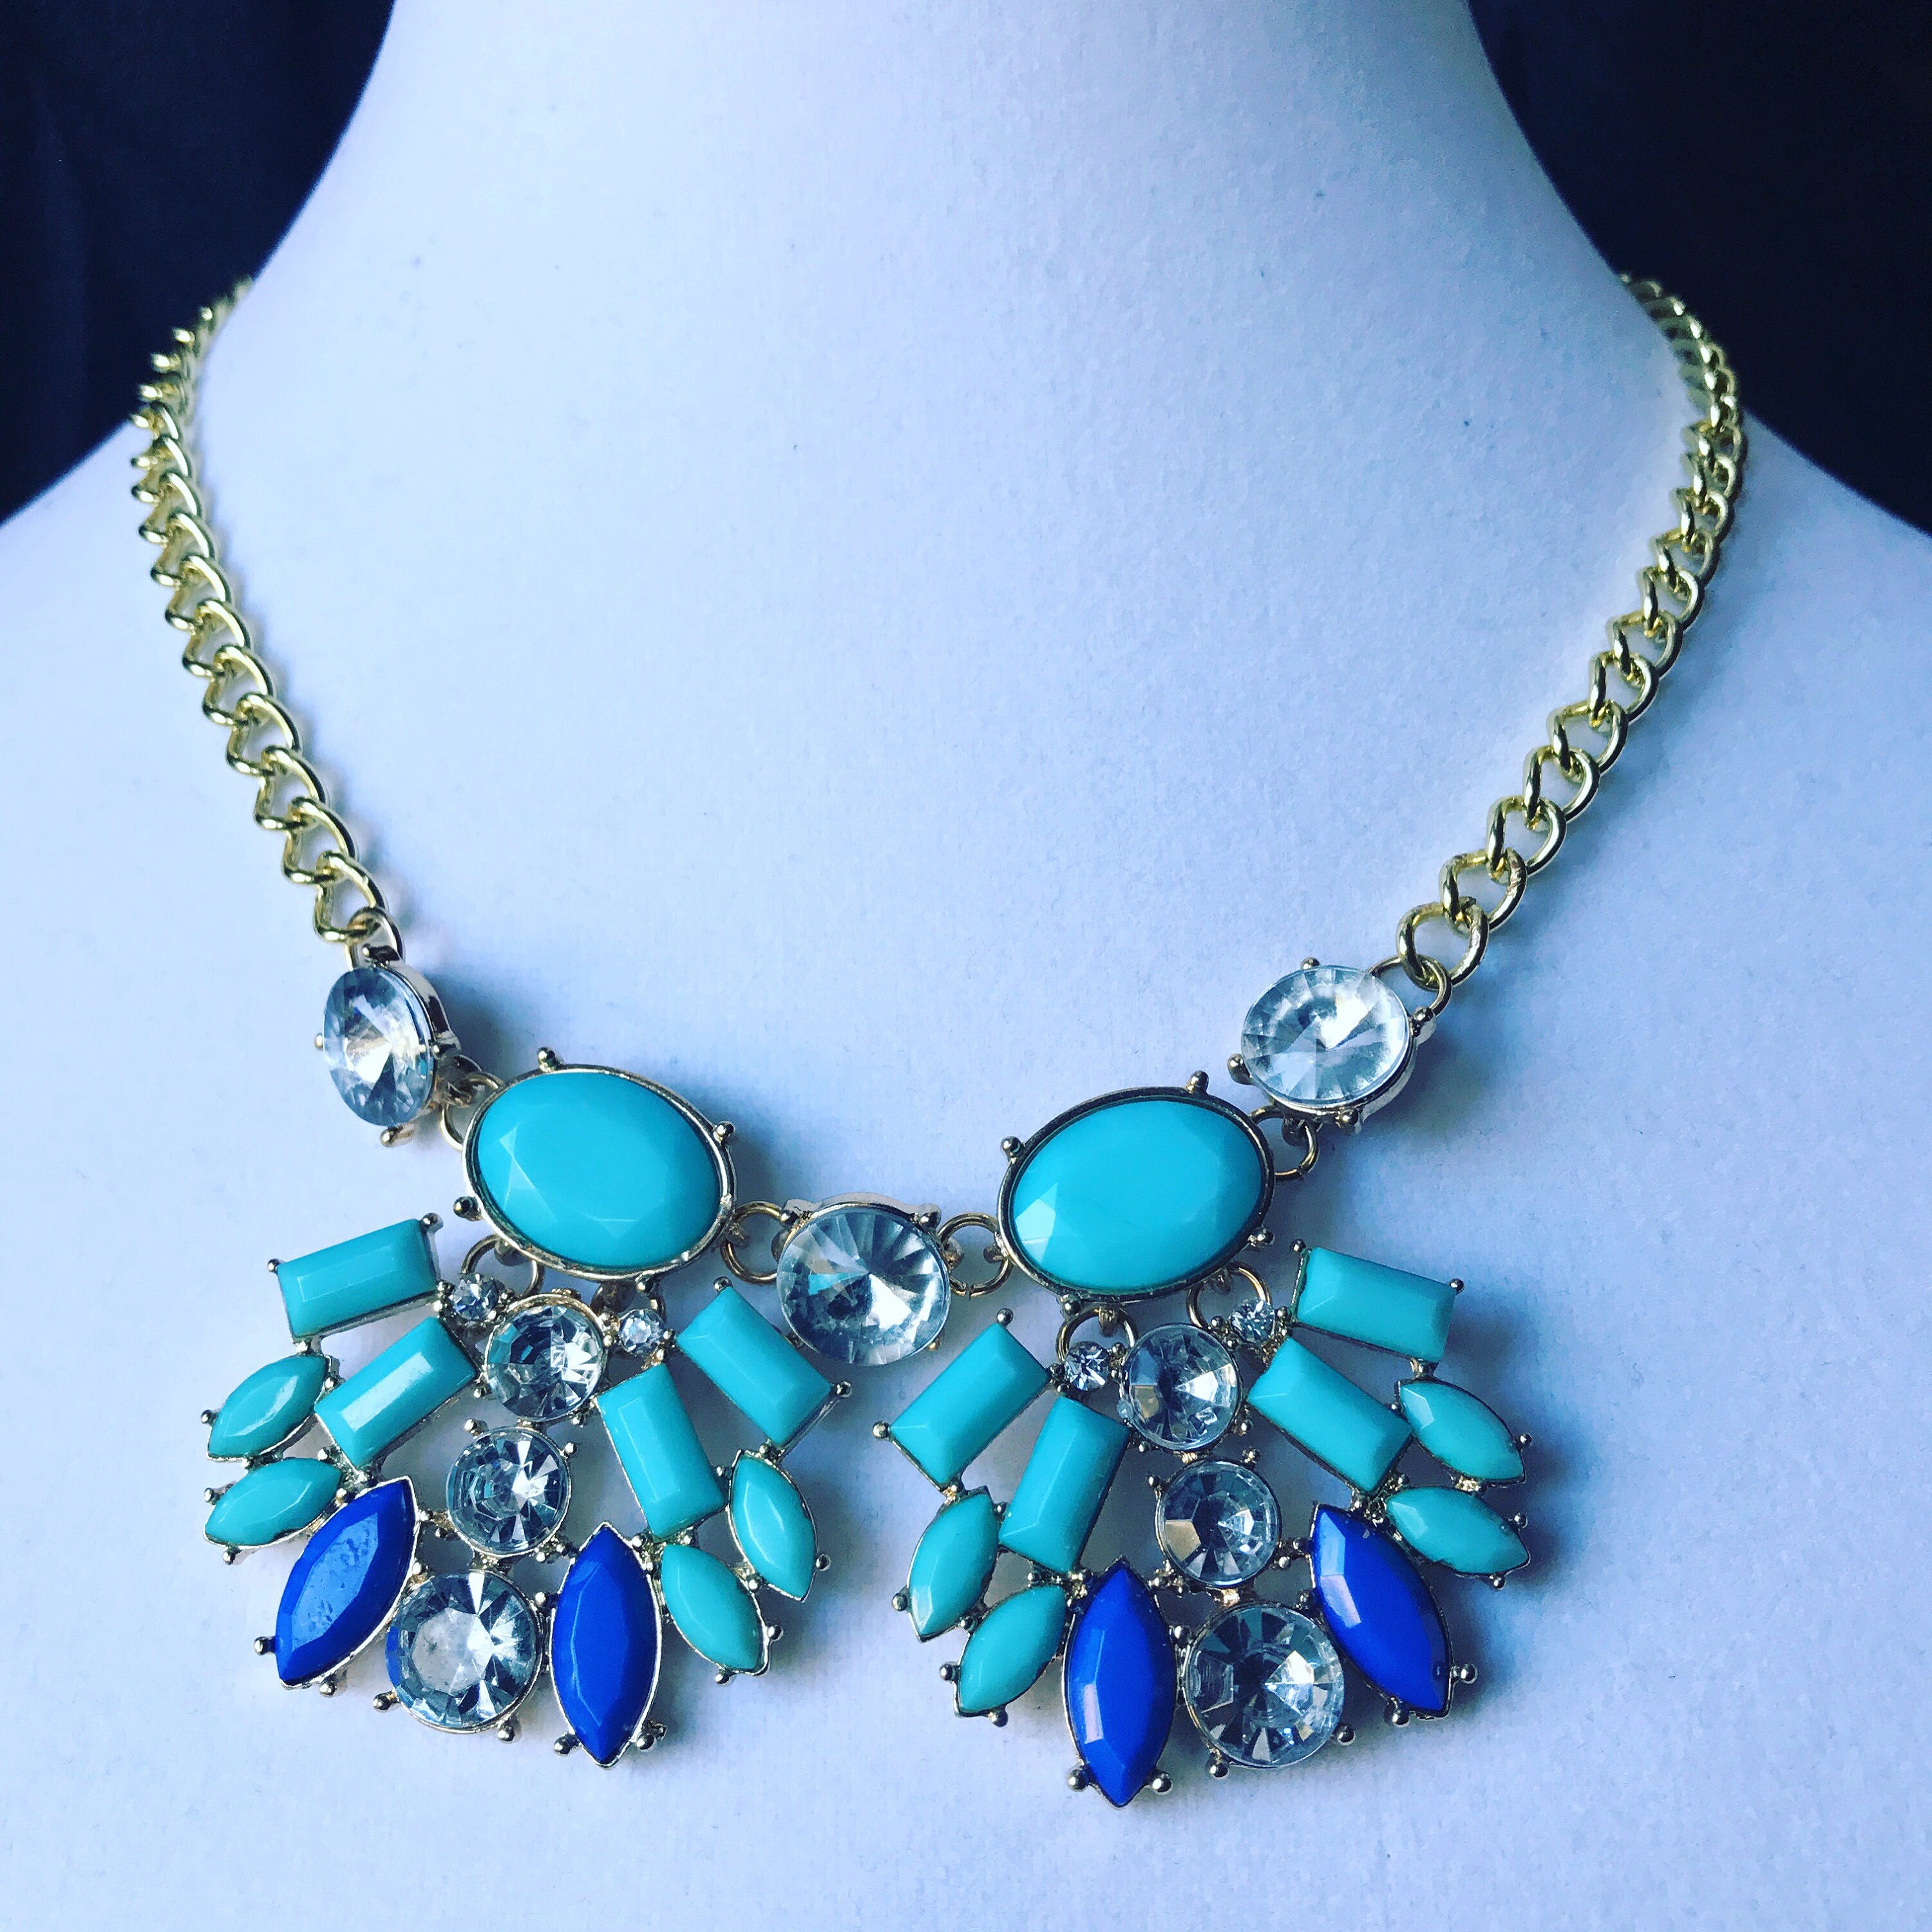 Vintage Turquoise Bib Necklace, Stunning Bib Necklace… - Gem